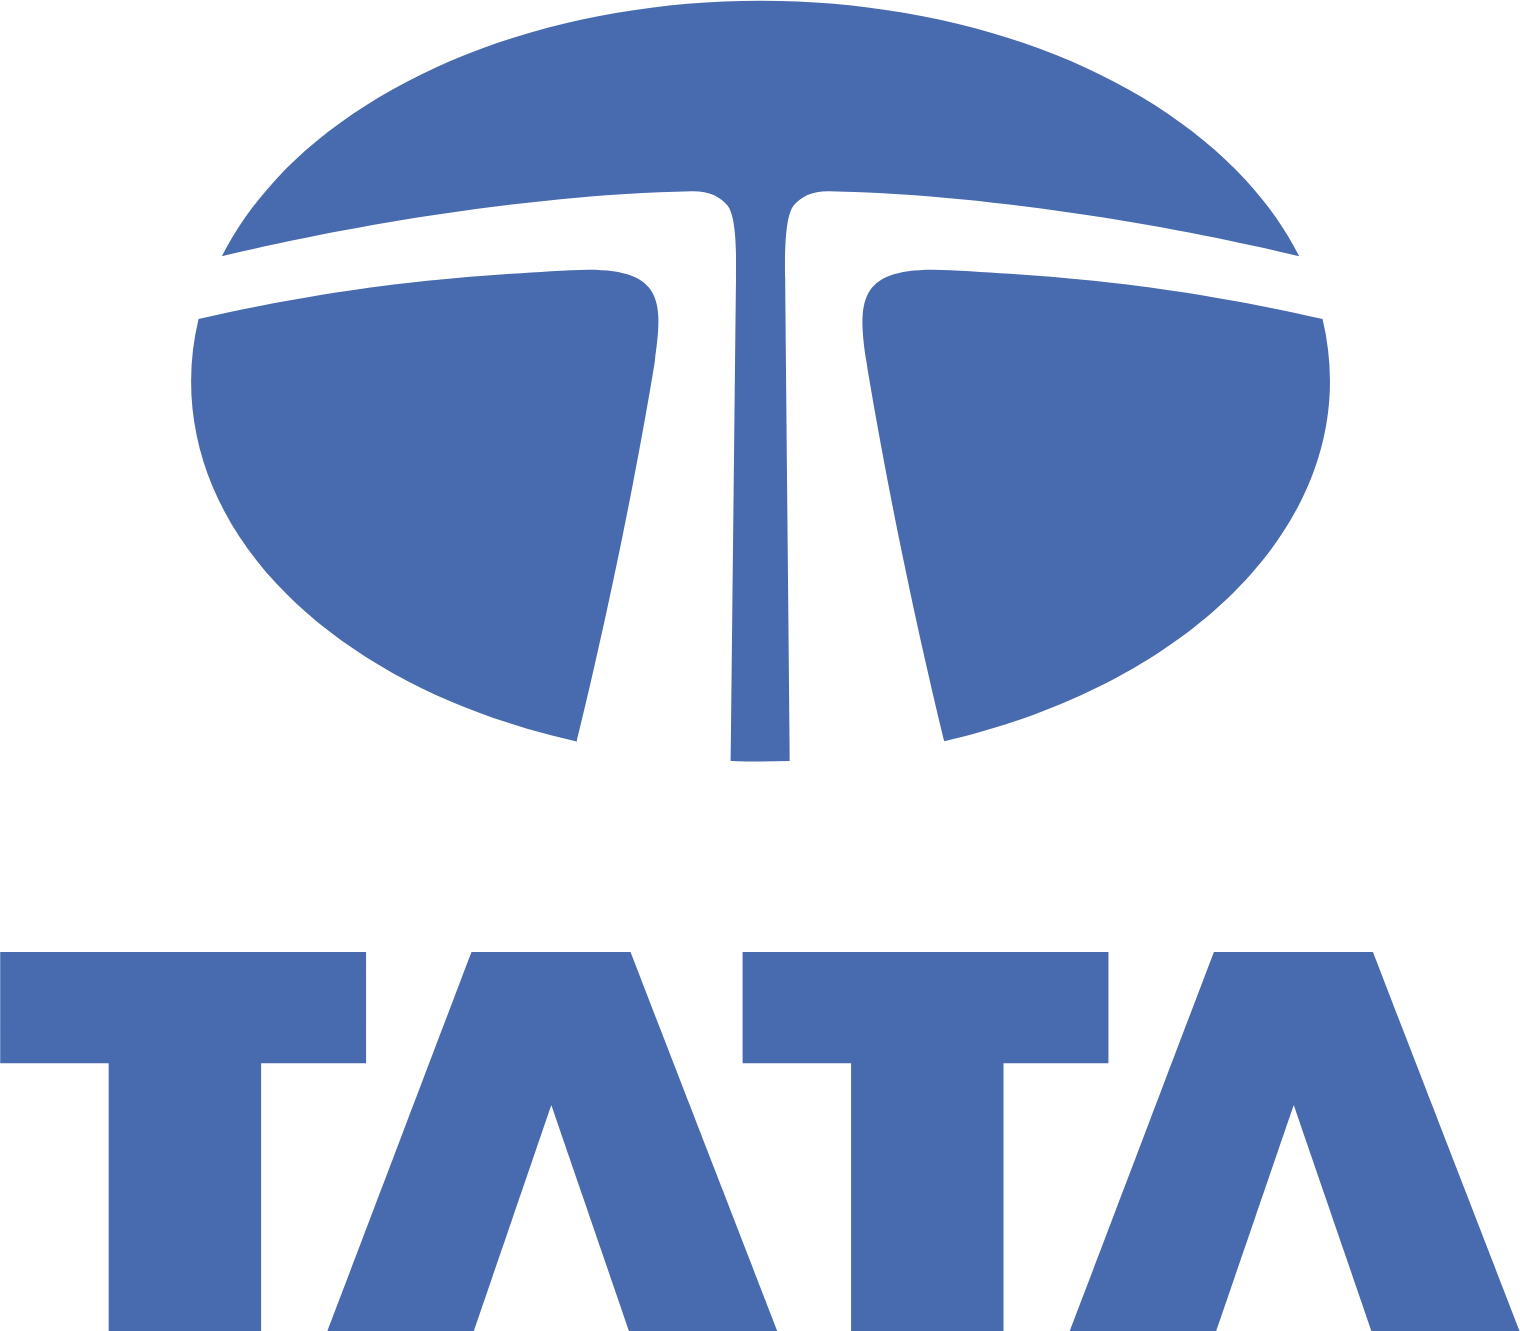 Tata Motors logo large (transparent PNG)